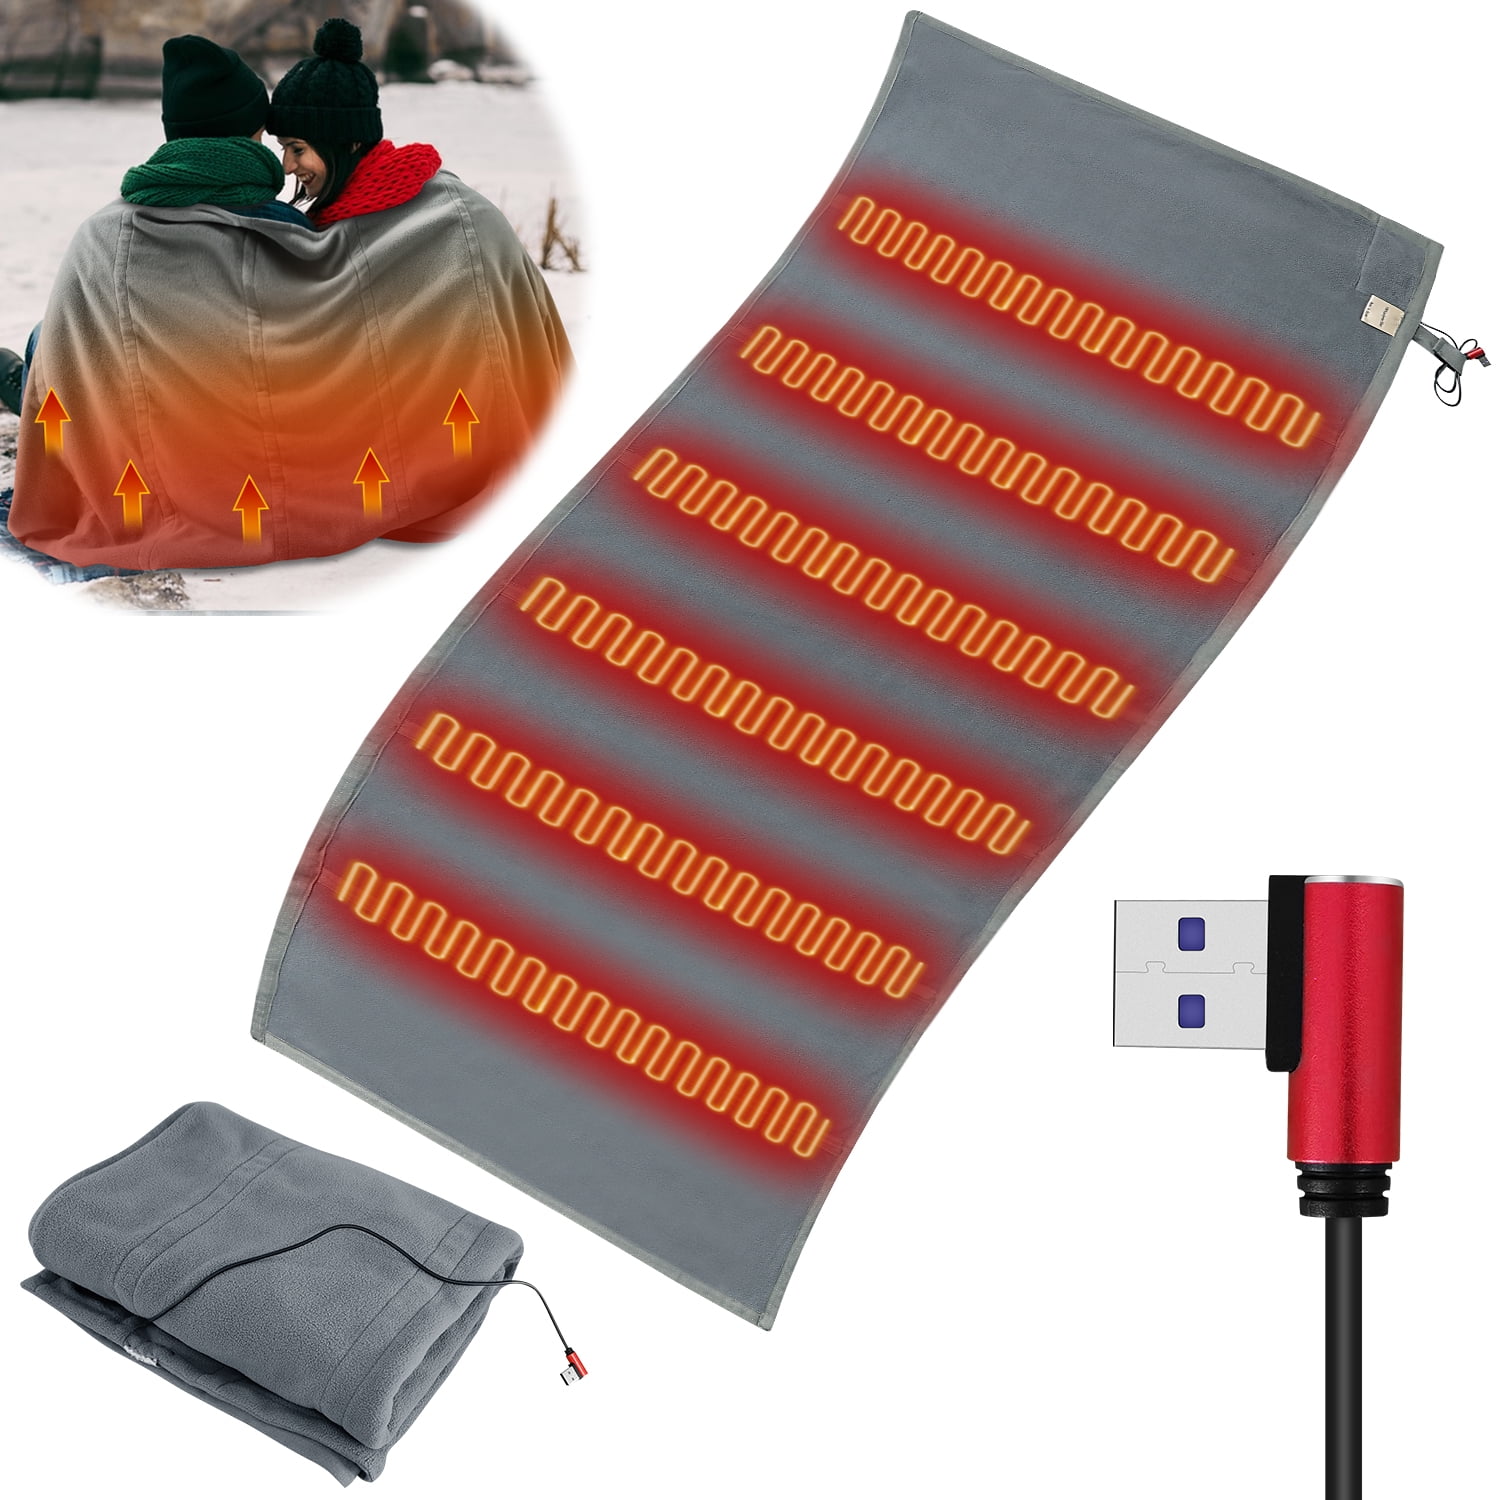 Heated Blanket Battery Operated-USB Cordless Heated Blanket Battery Powered Heater with 3 Heating Levels Car Heated Blanket Machine Washable Heated